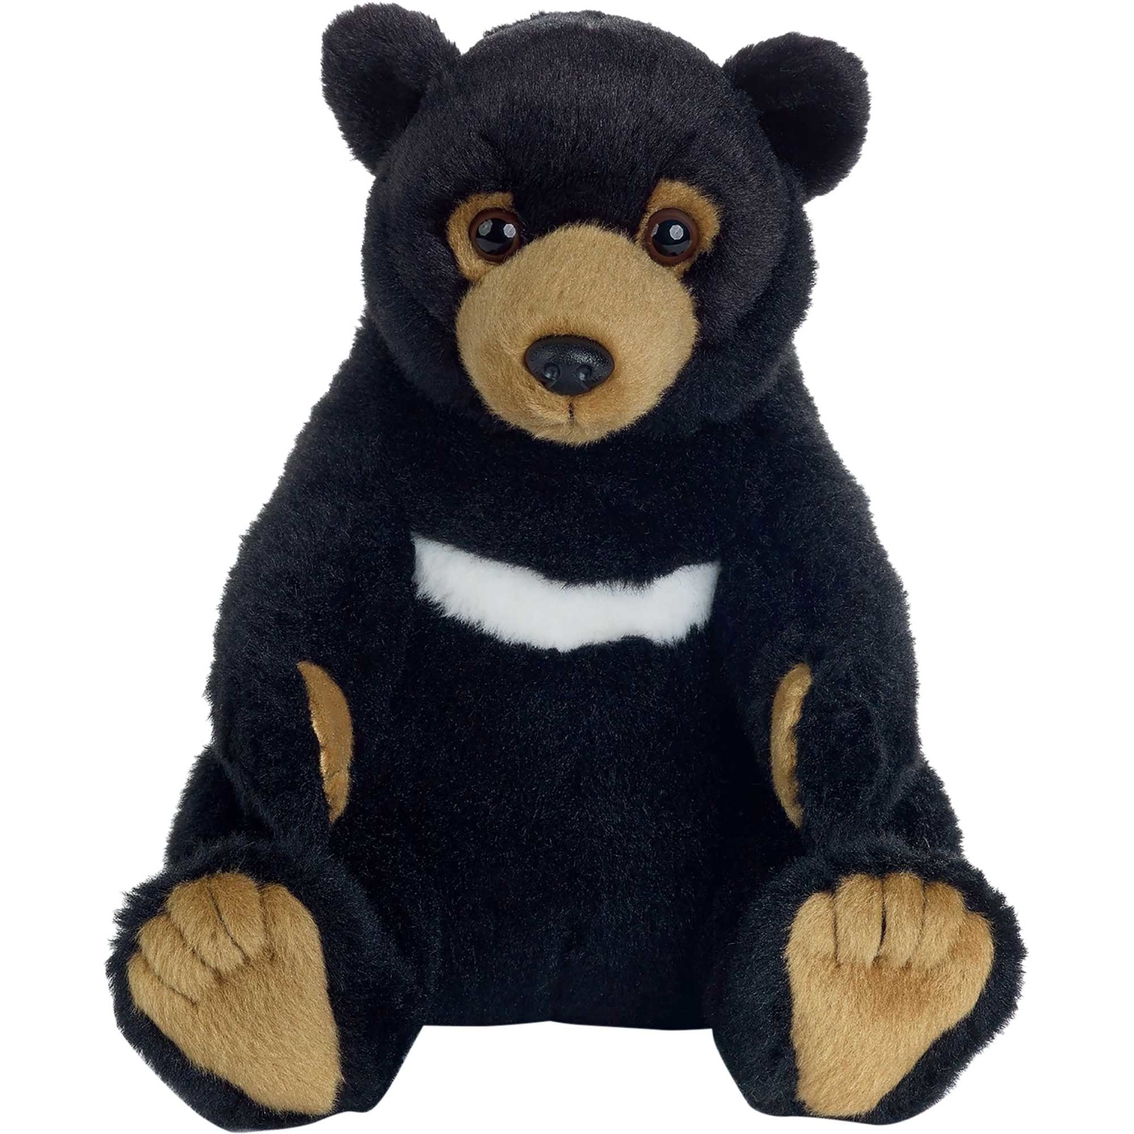 Venturelli National Geographic Basic Collection Lelly Plush Black Bear